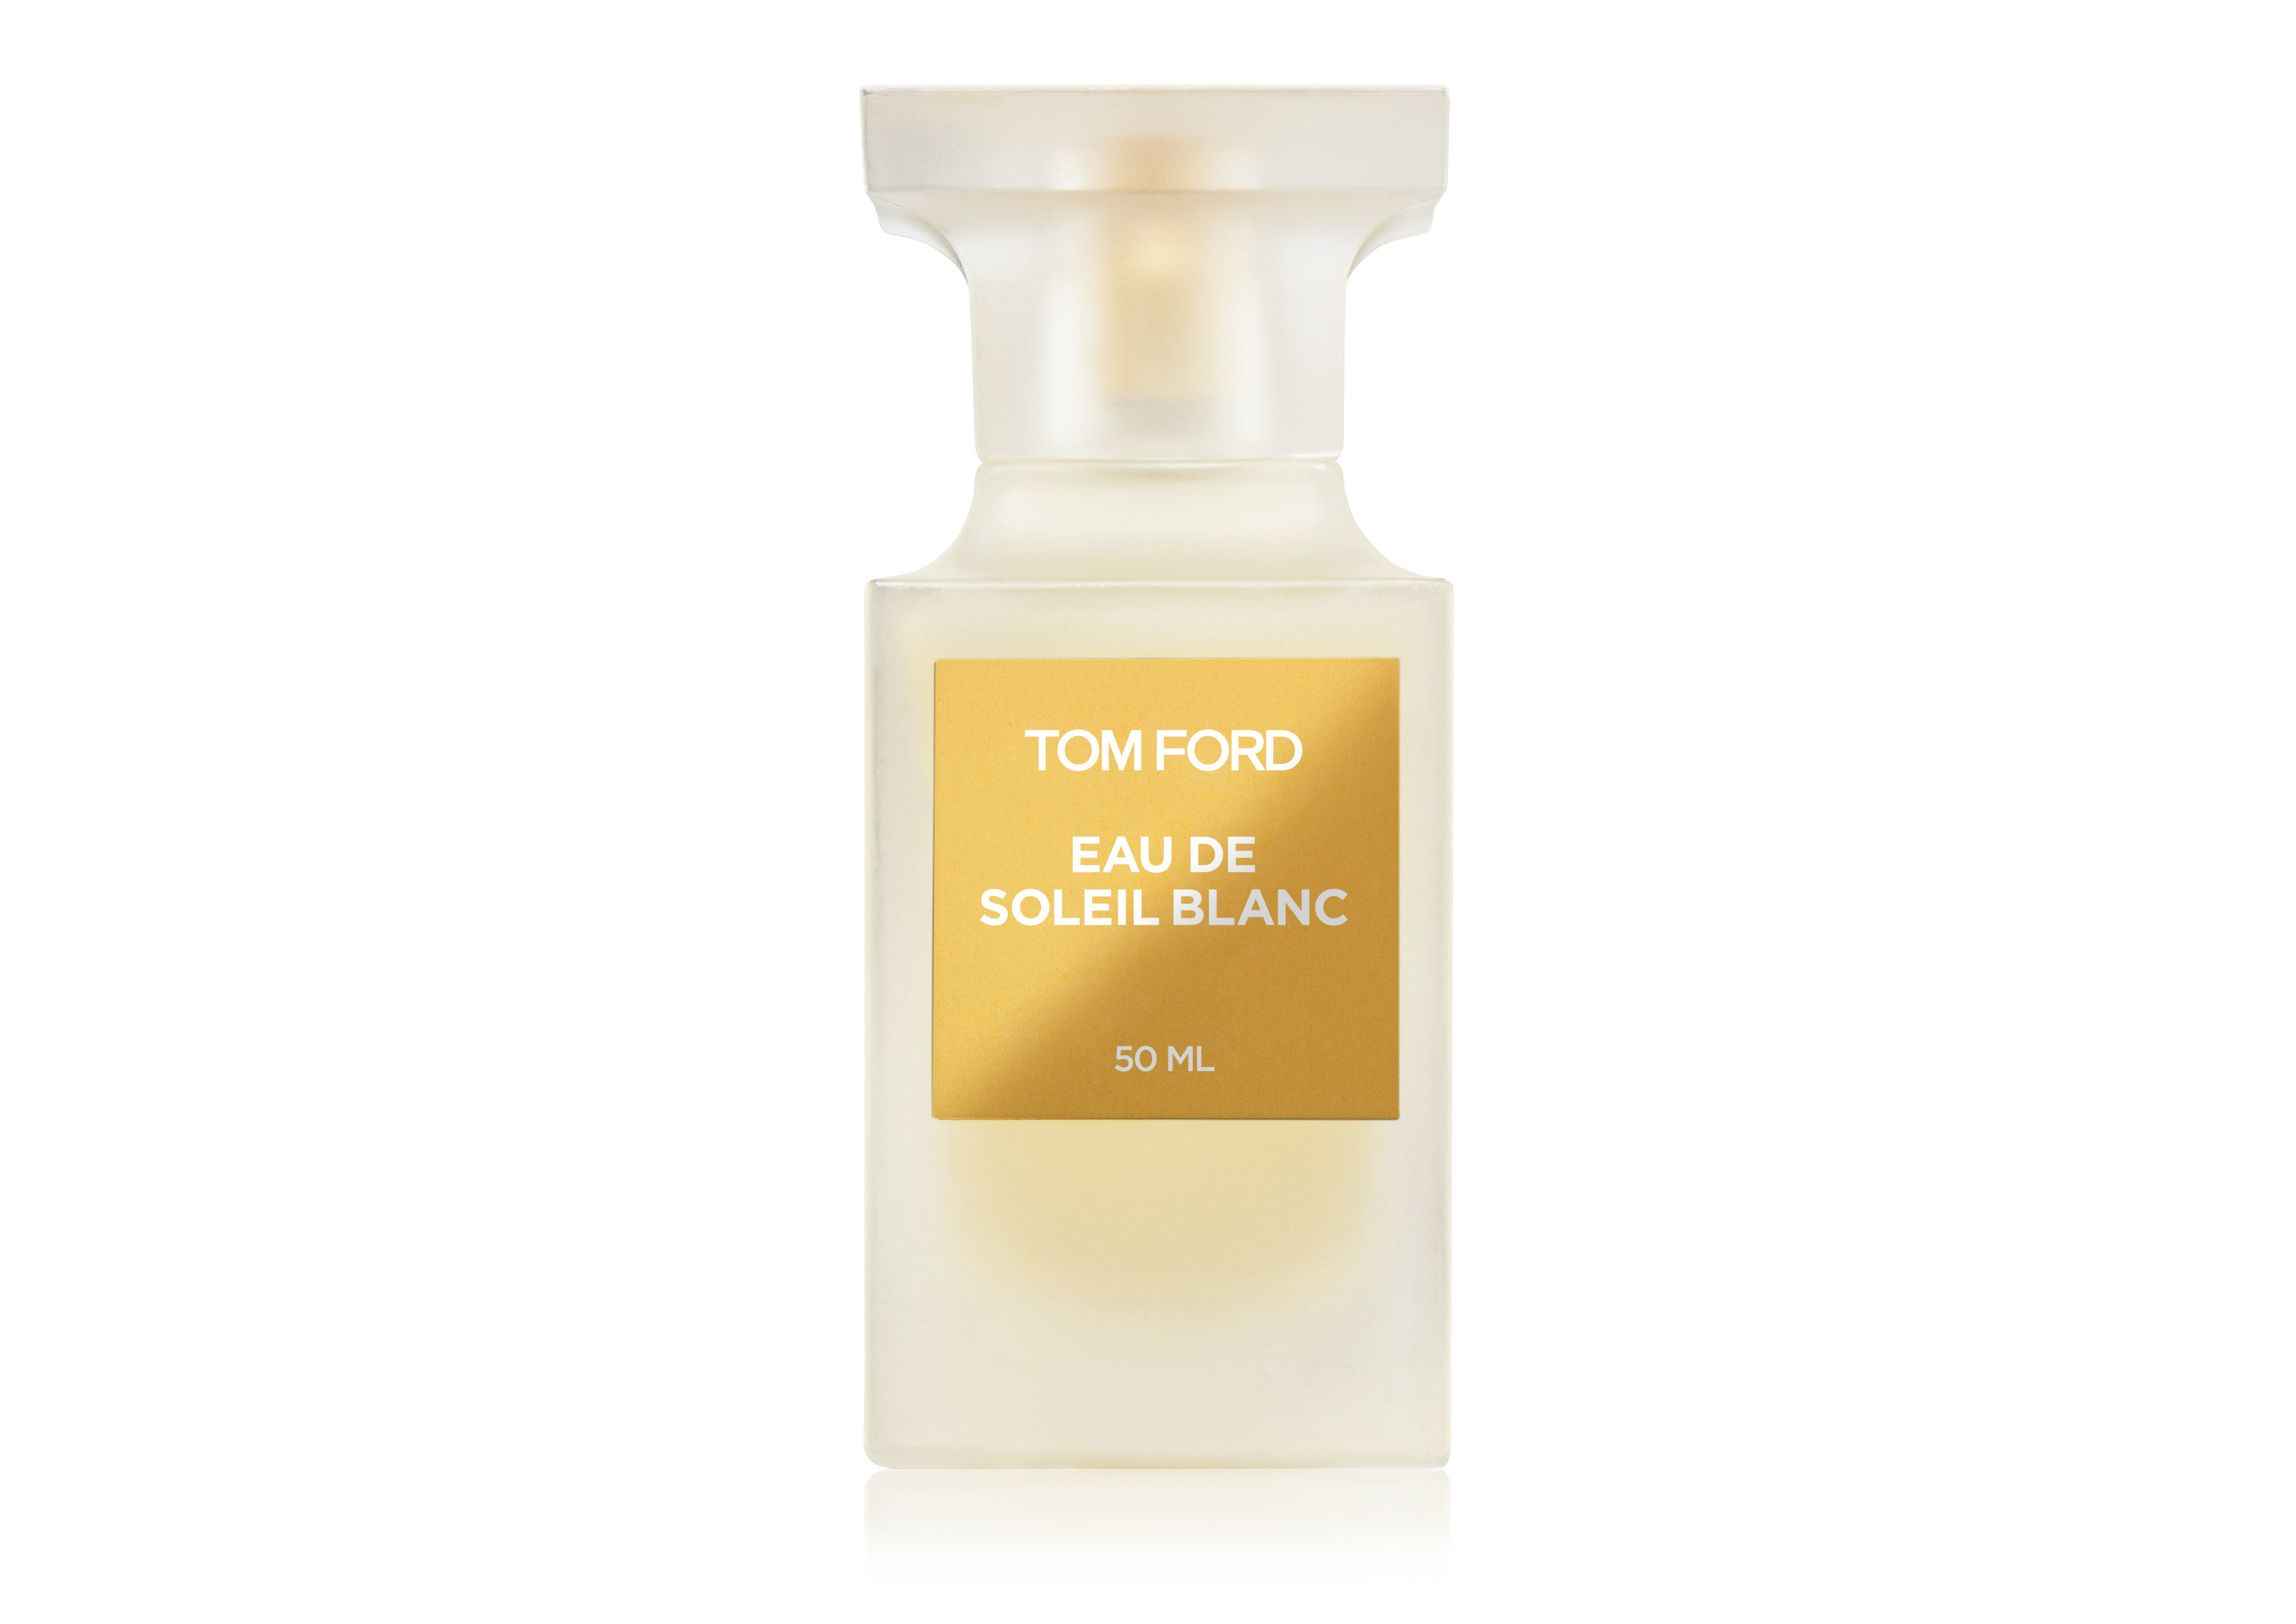 Tom Ford Beauty - Eau De Soleil Blanc 50 ml, Bianco, large